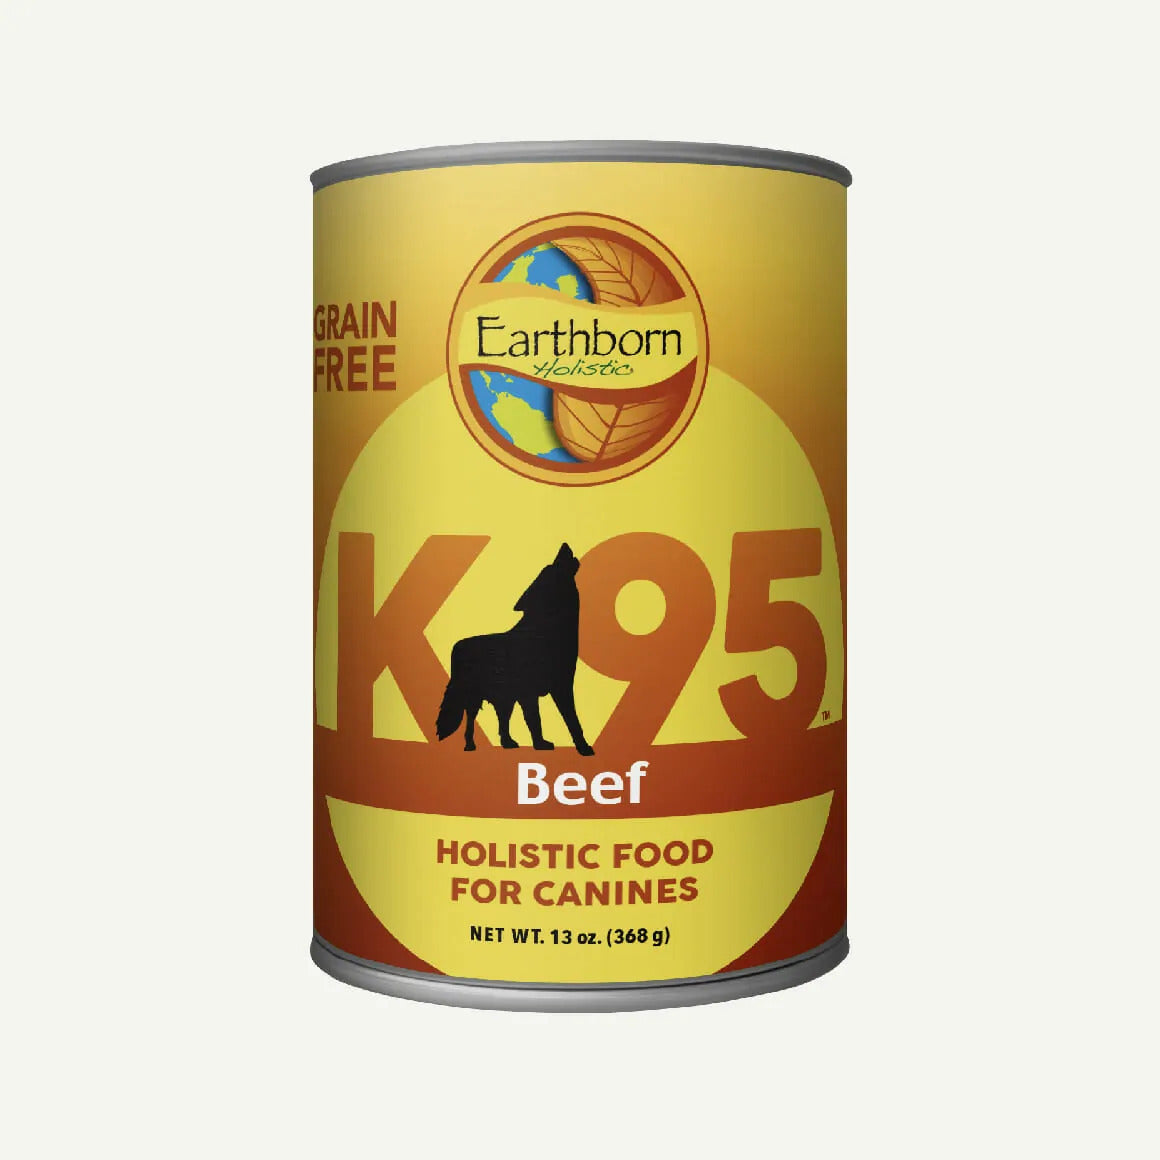 Earthborn Canned Dog Food K95 Beef 13oz